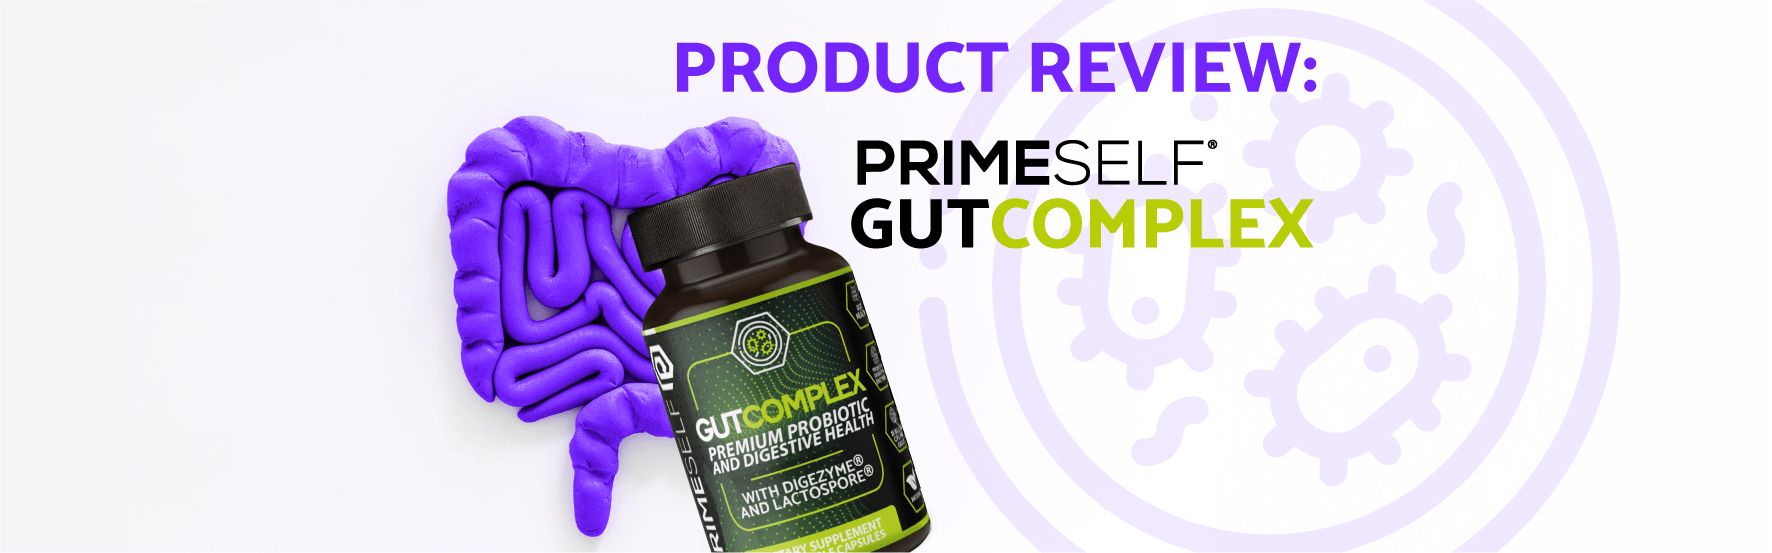 PRIMESELF Gut Complex Product Review